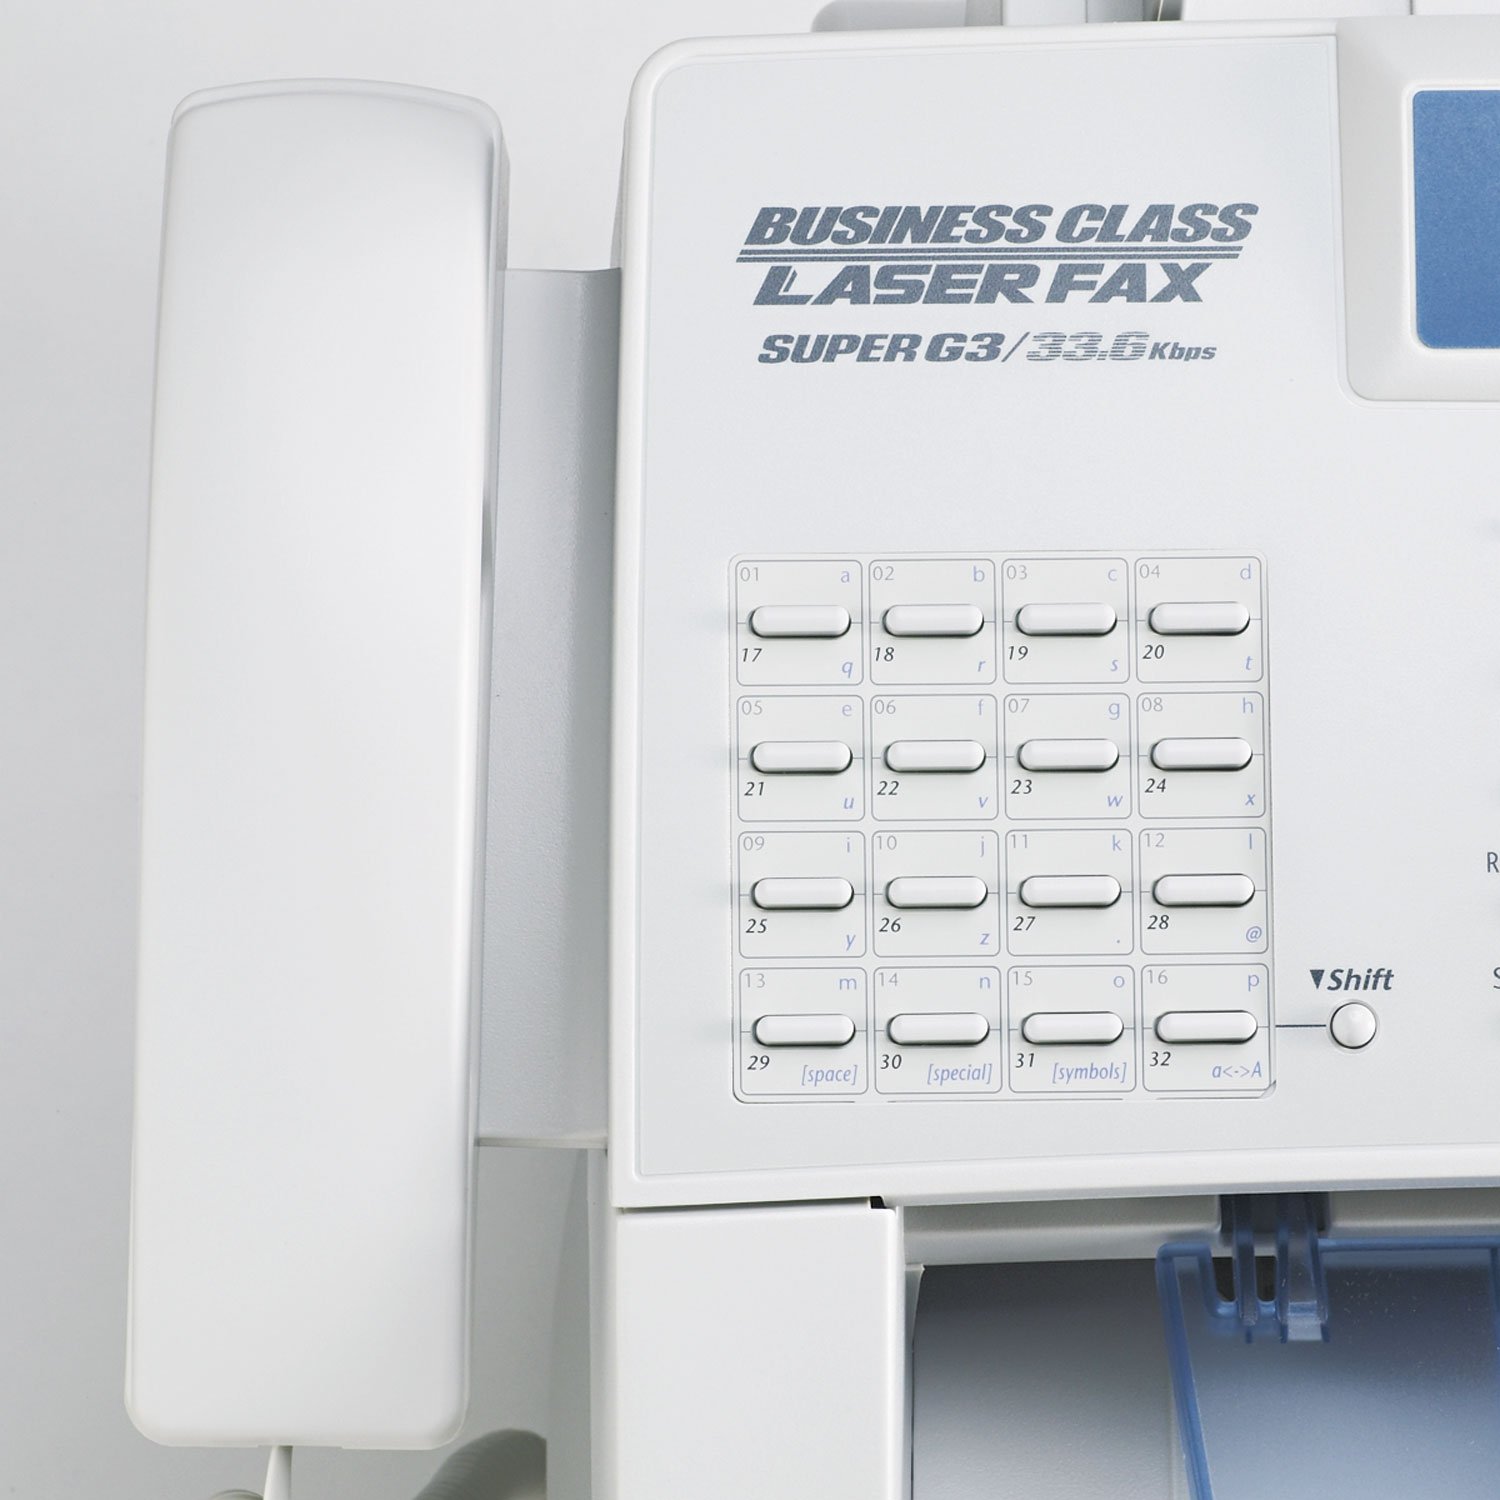 Brother PPF5750E intelliFAX-5750e Business-Class Laser Fax Machine, Copy/Fax/Print